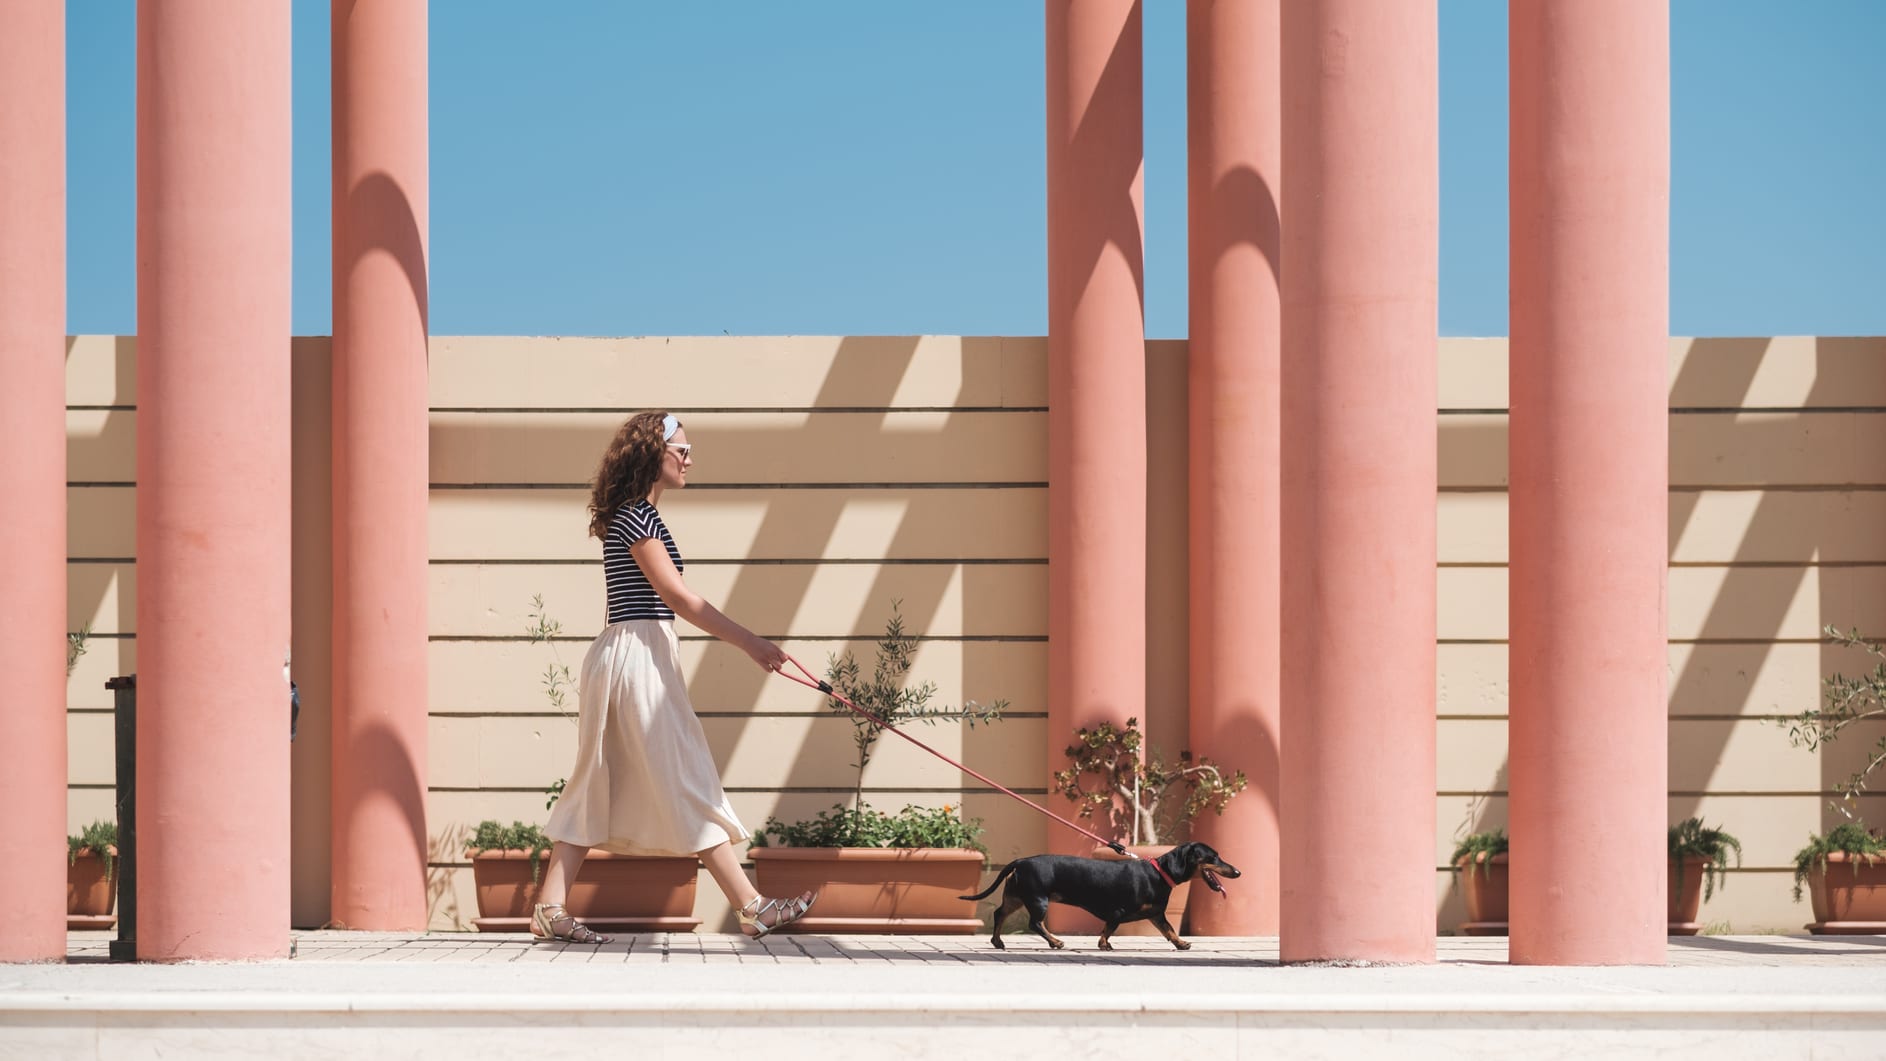 Stylish brunette woman walking with black dachshund among the pastel columns.